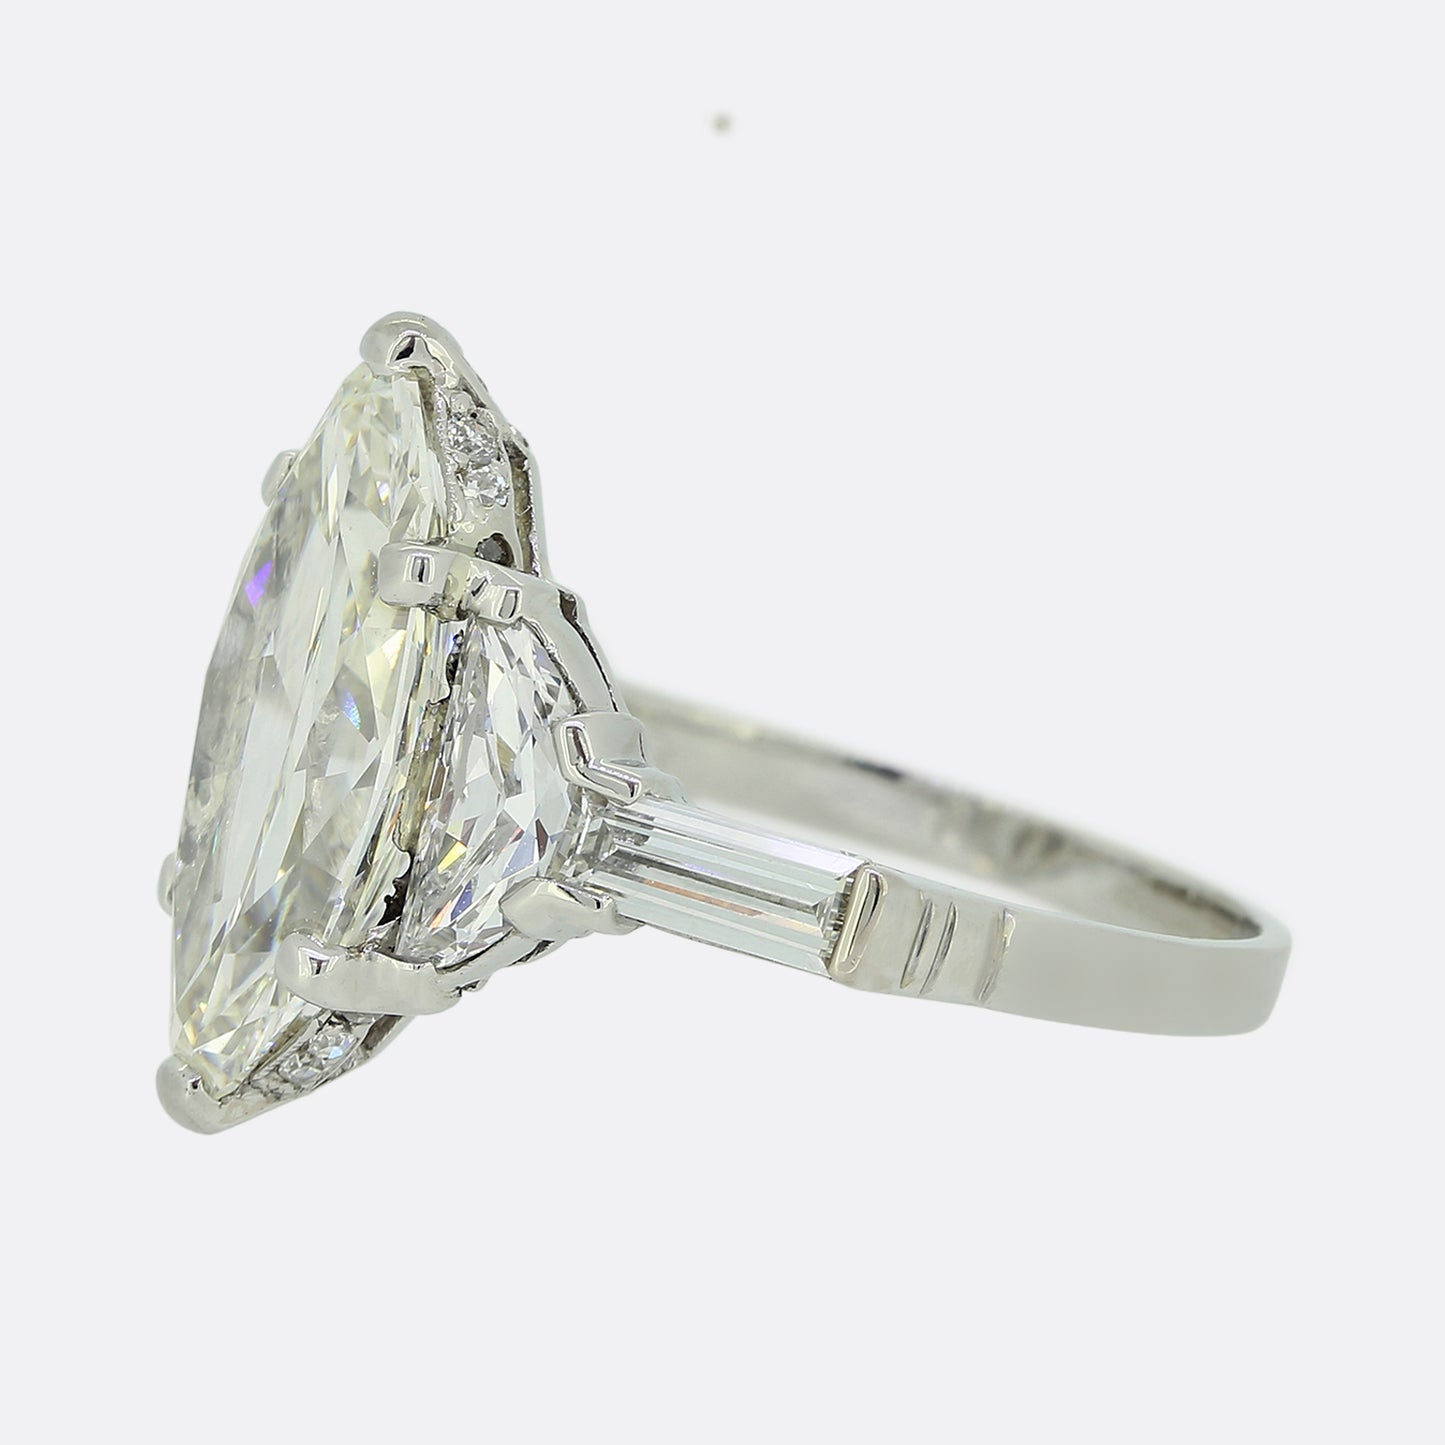 Art Deco 3.12 Carat Marquise Cut Diamond Engagement Ring